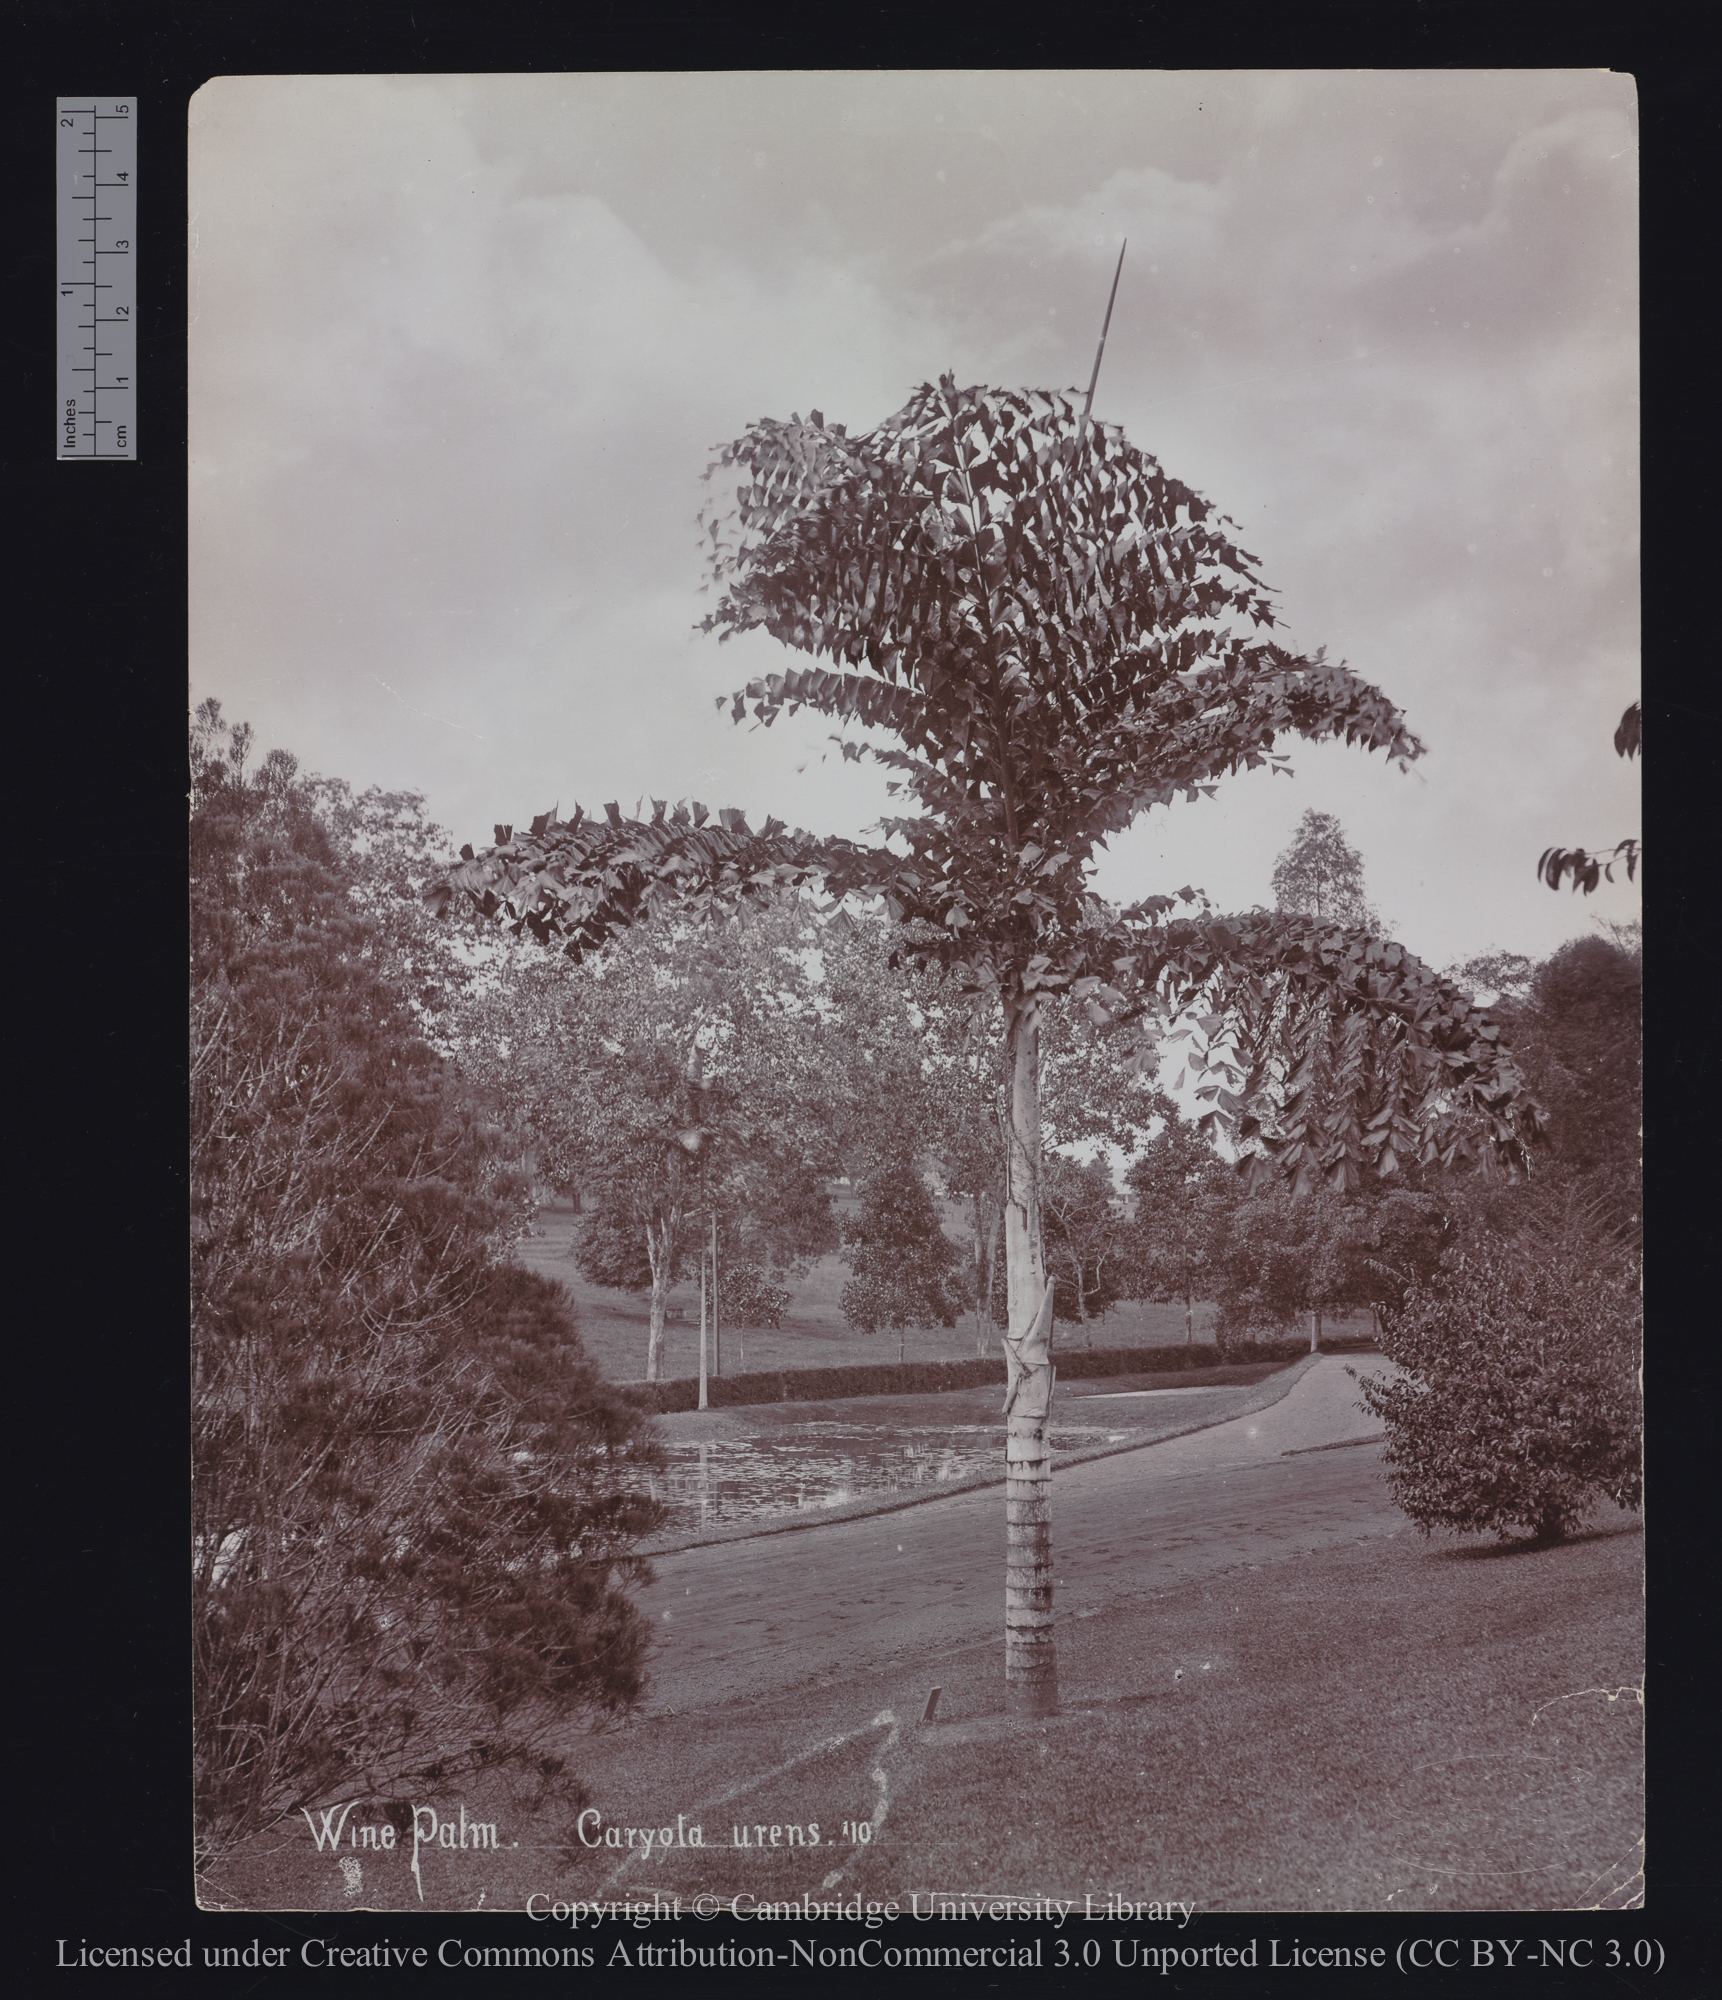 Wine palm. Caryota urens, 1900